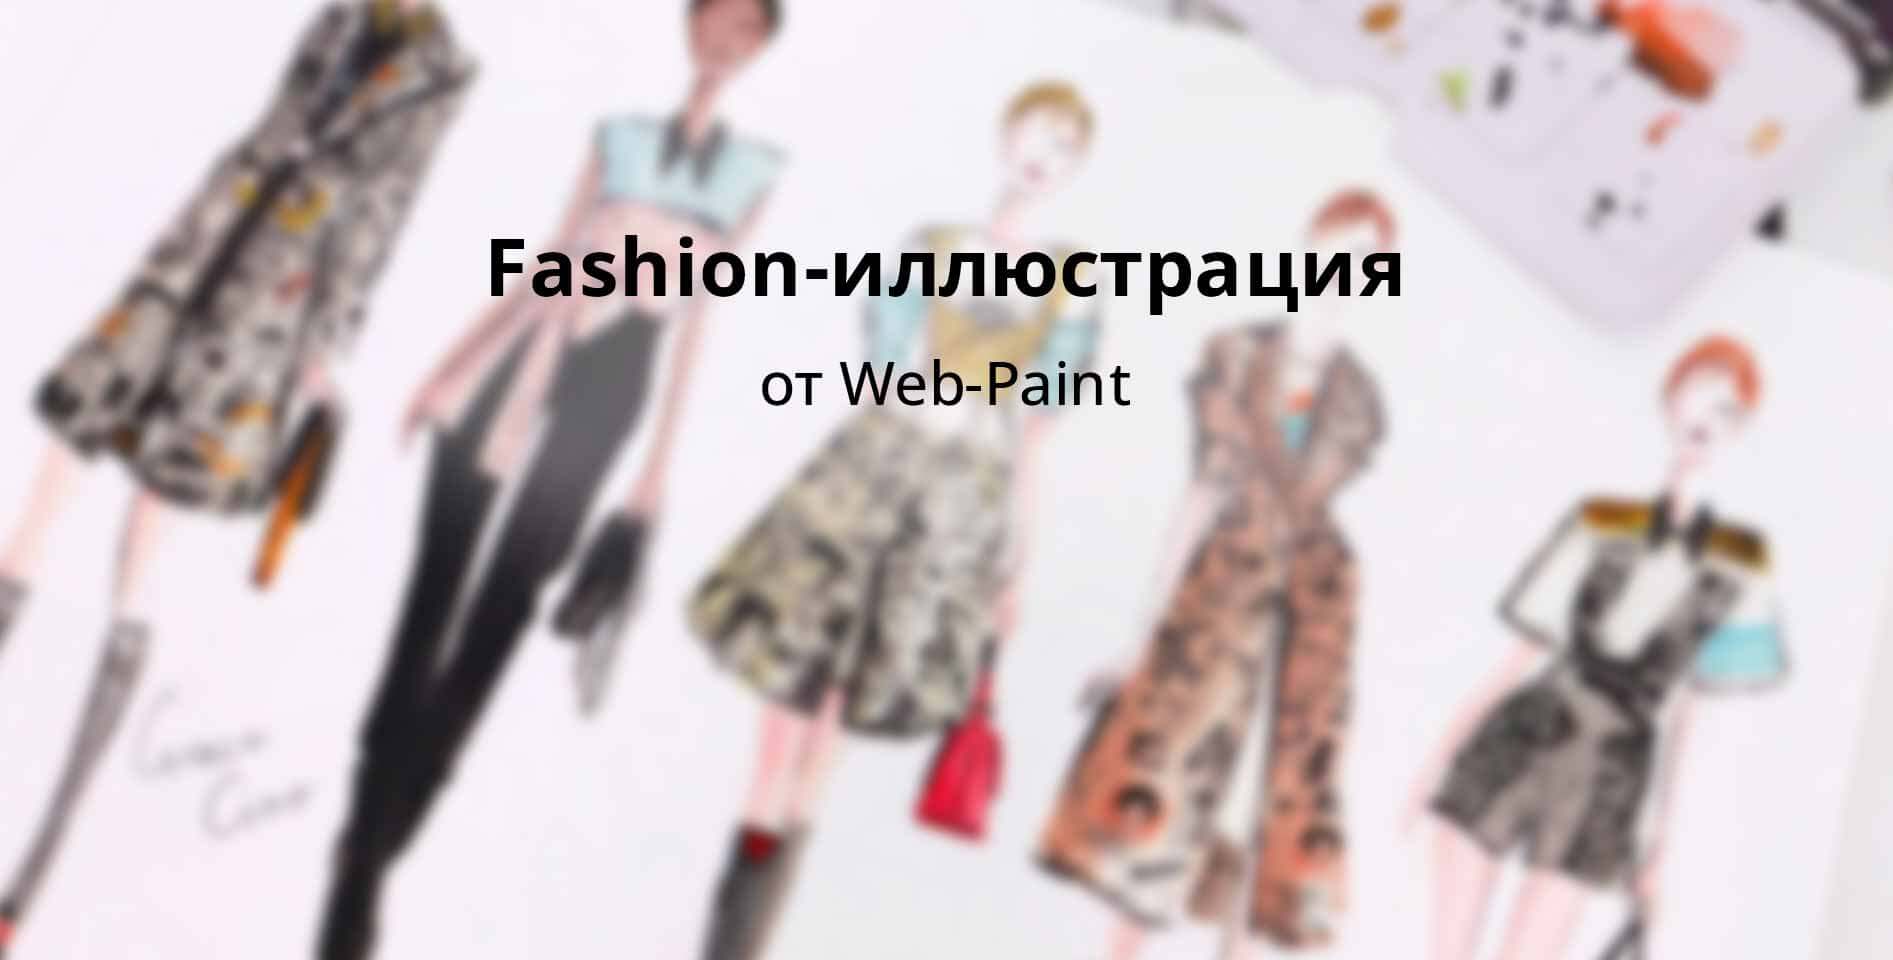 Web-Paint — Fashion-иллюстрация